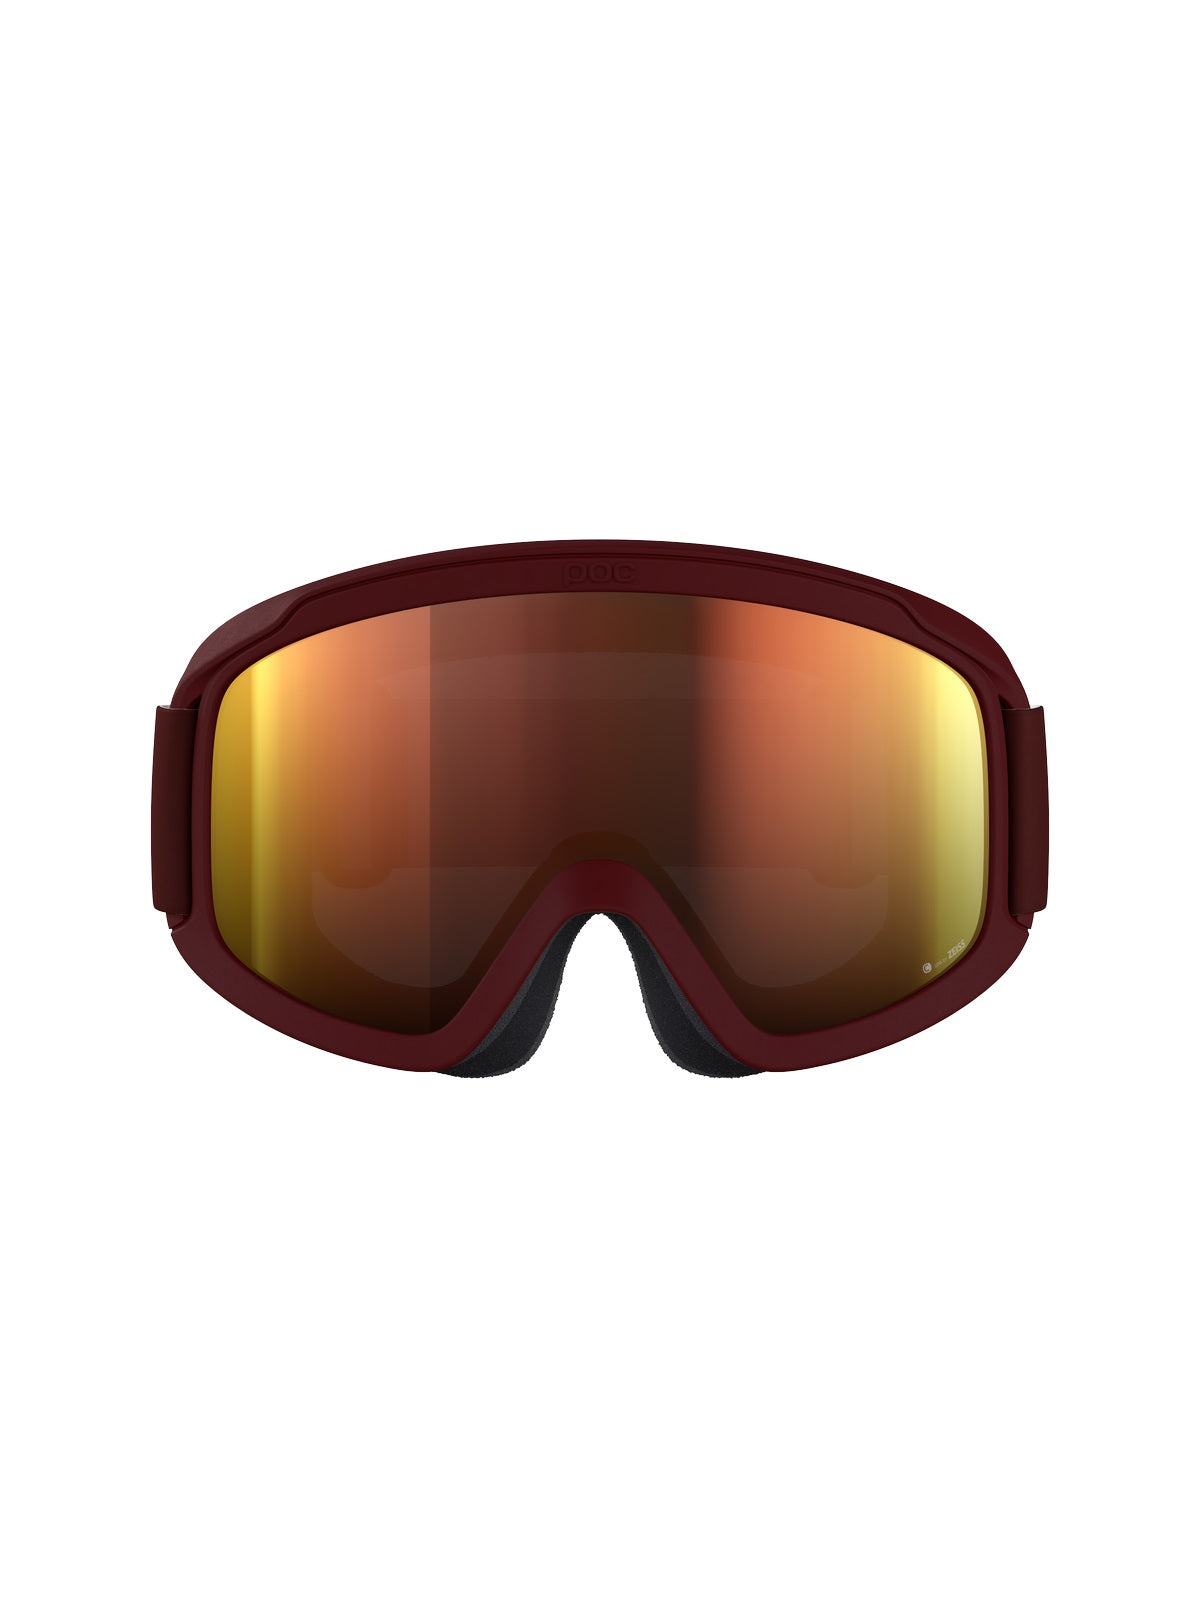 Gogle narciarskie POC Opsin Clarity - Garnet Red/Spektris Orange Cat 2